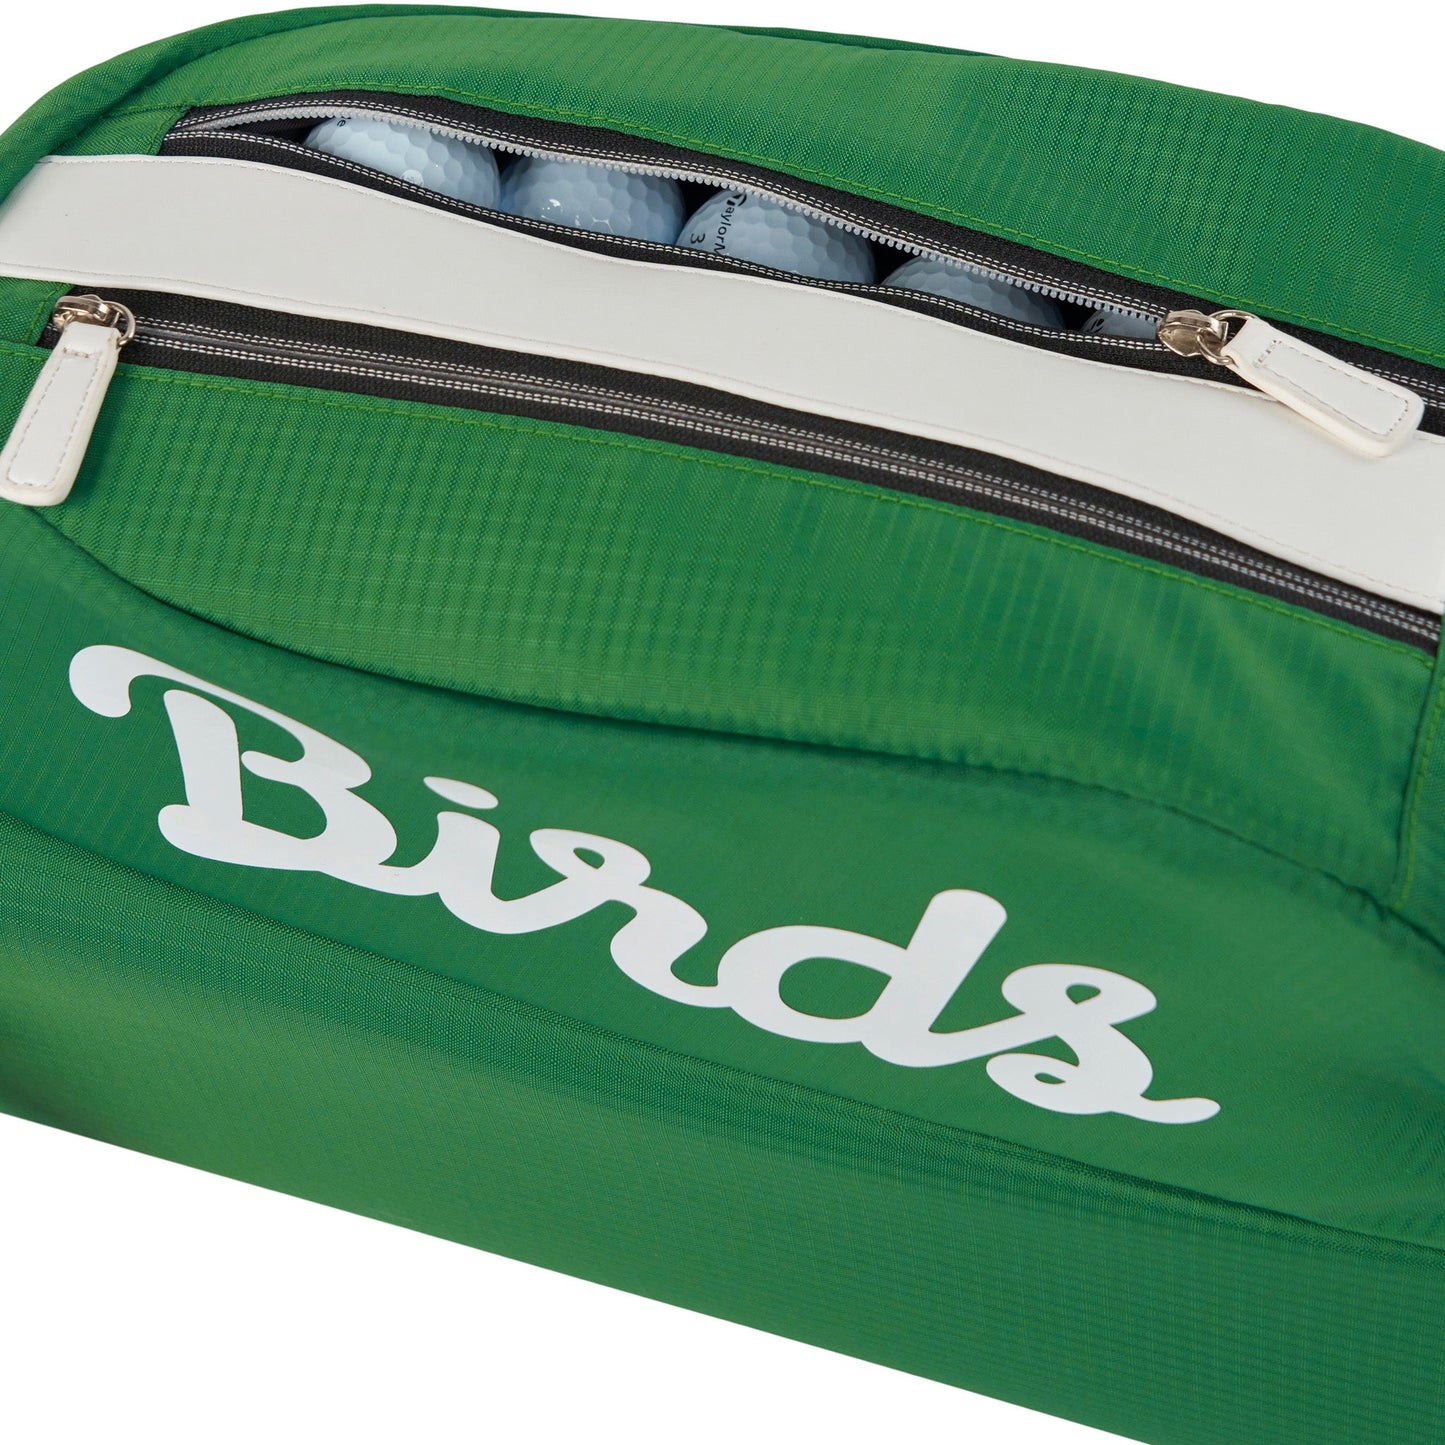 Birds Golf Bag